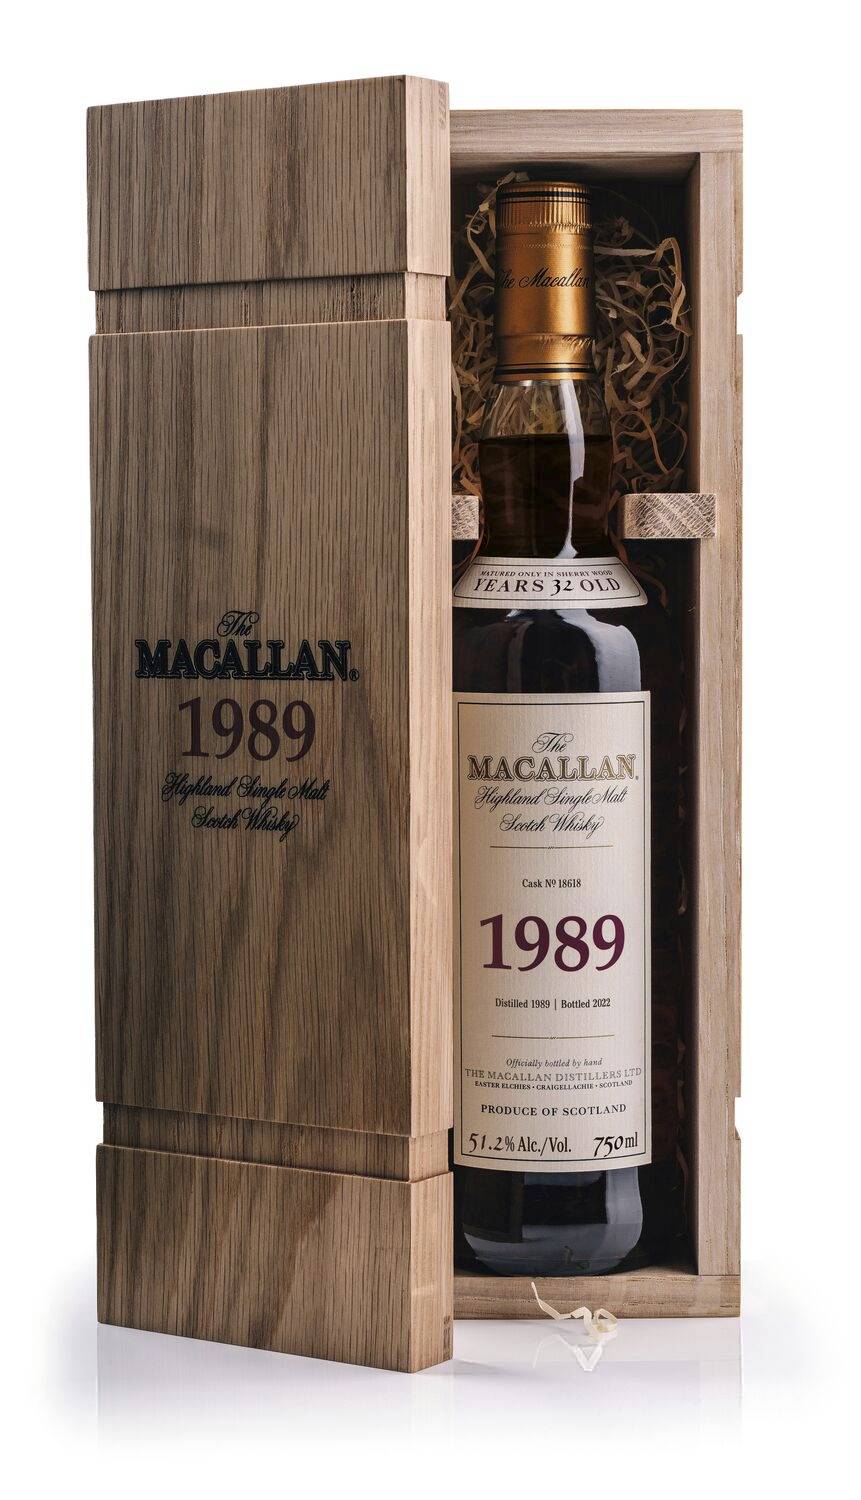 The Macallan 1989 whiskey